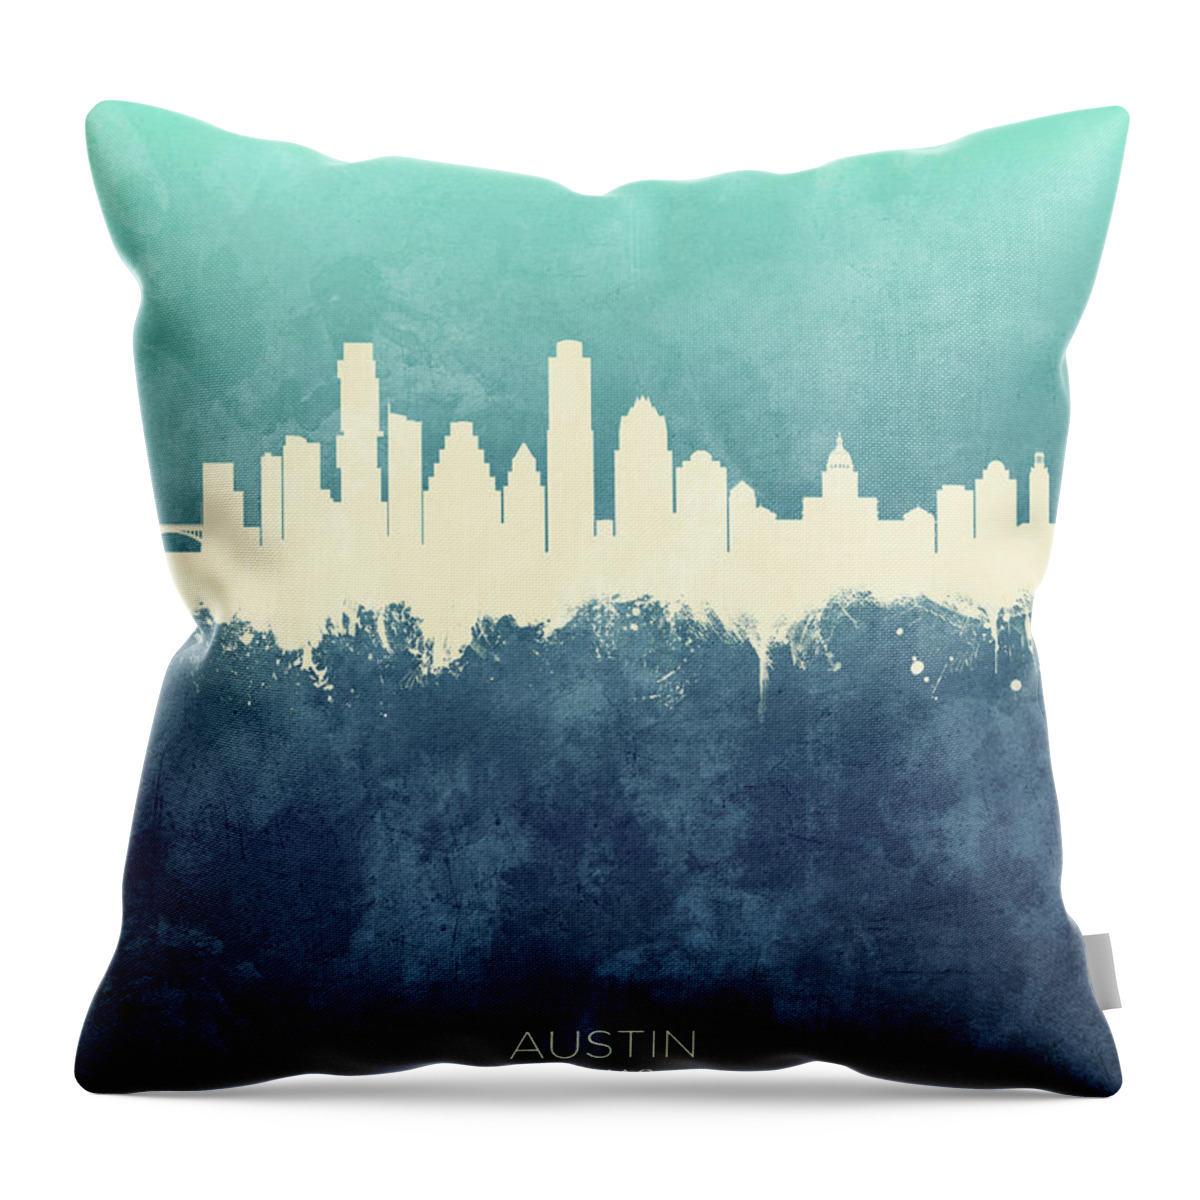 Austin Throw Pillow featuring the digital art Austin Texas Skyline #17 by Michael Tompsett